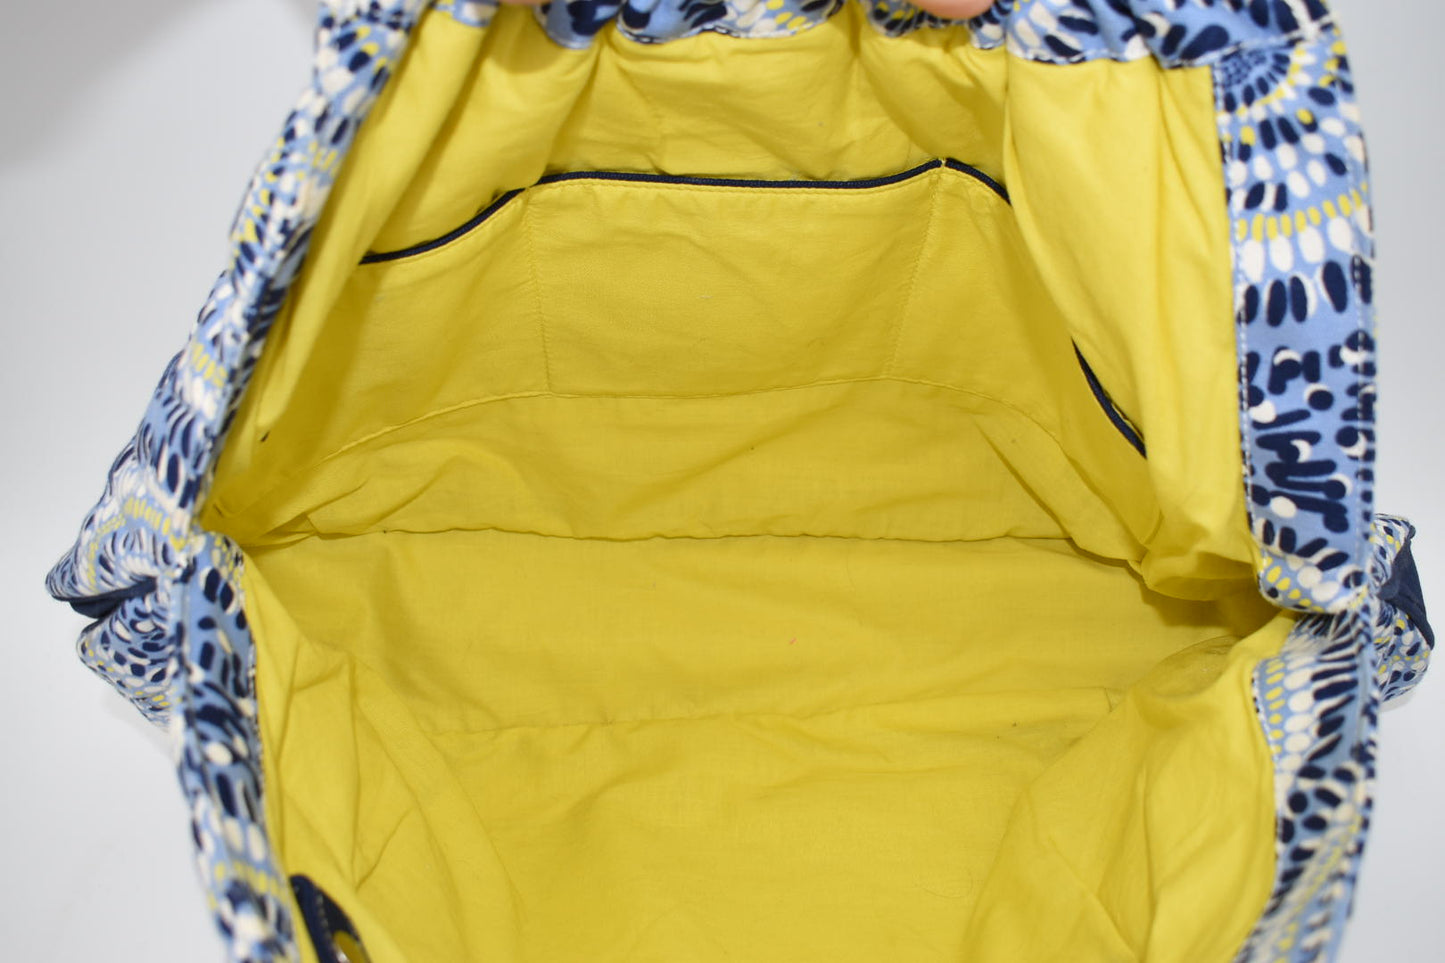 Vera Bradley Large Tote/Shoulder Bag in "Starry Night" Pattern